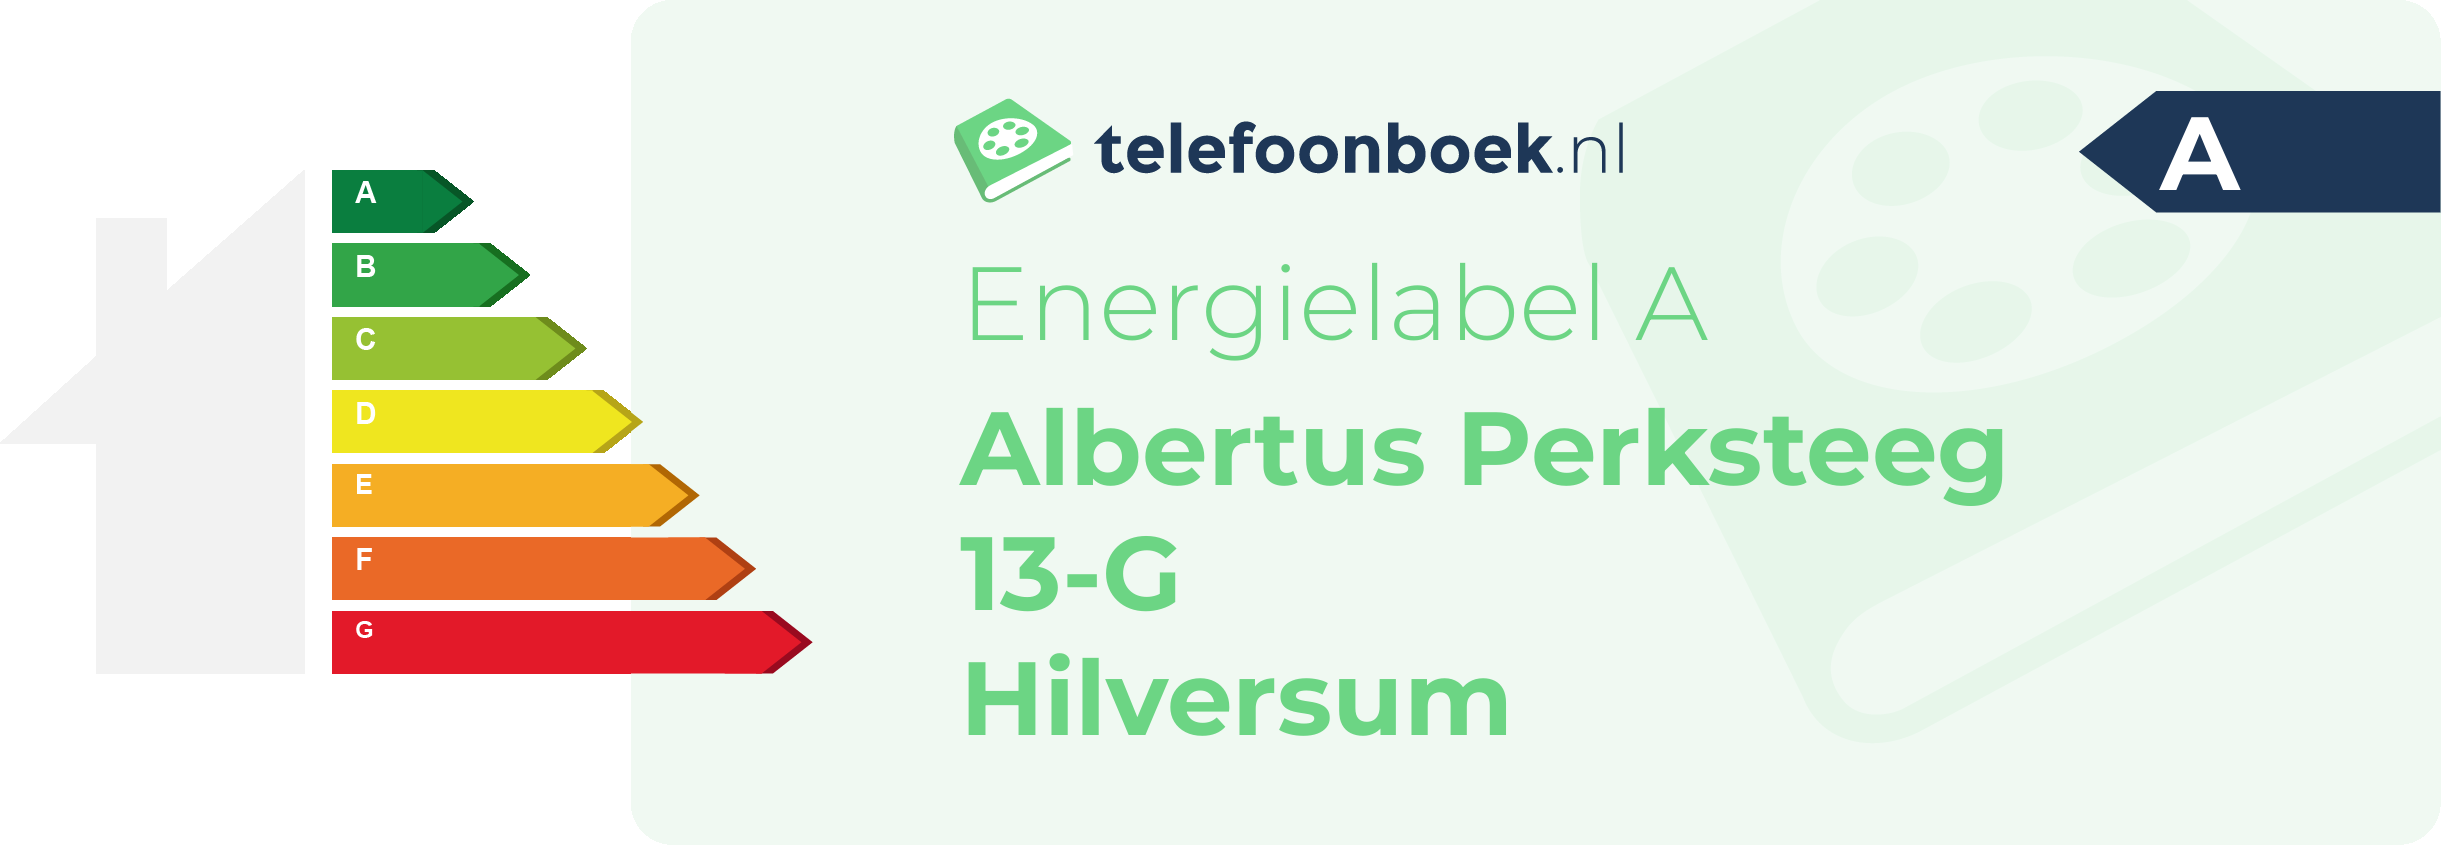 Energielabel Albertus Perksteeg 13-G Hilversum